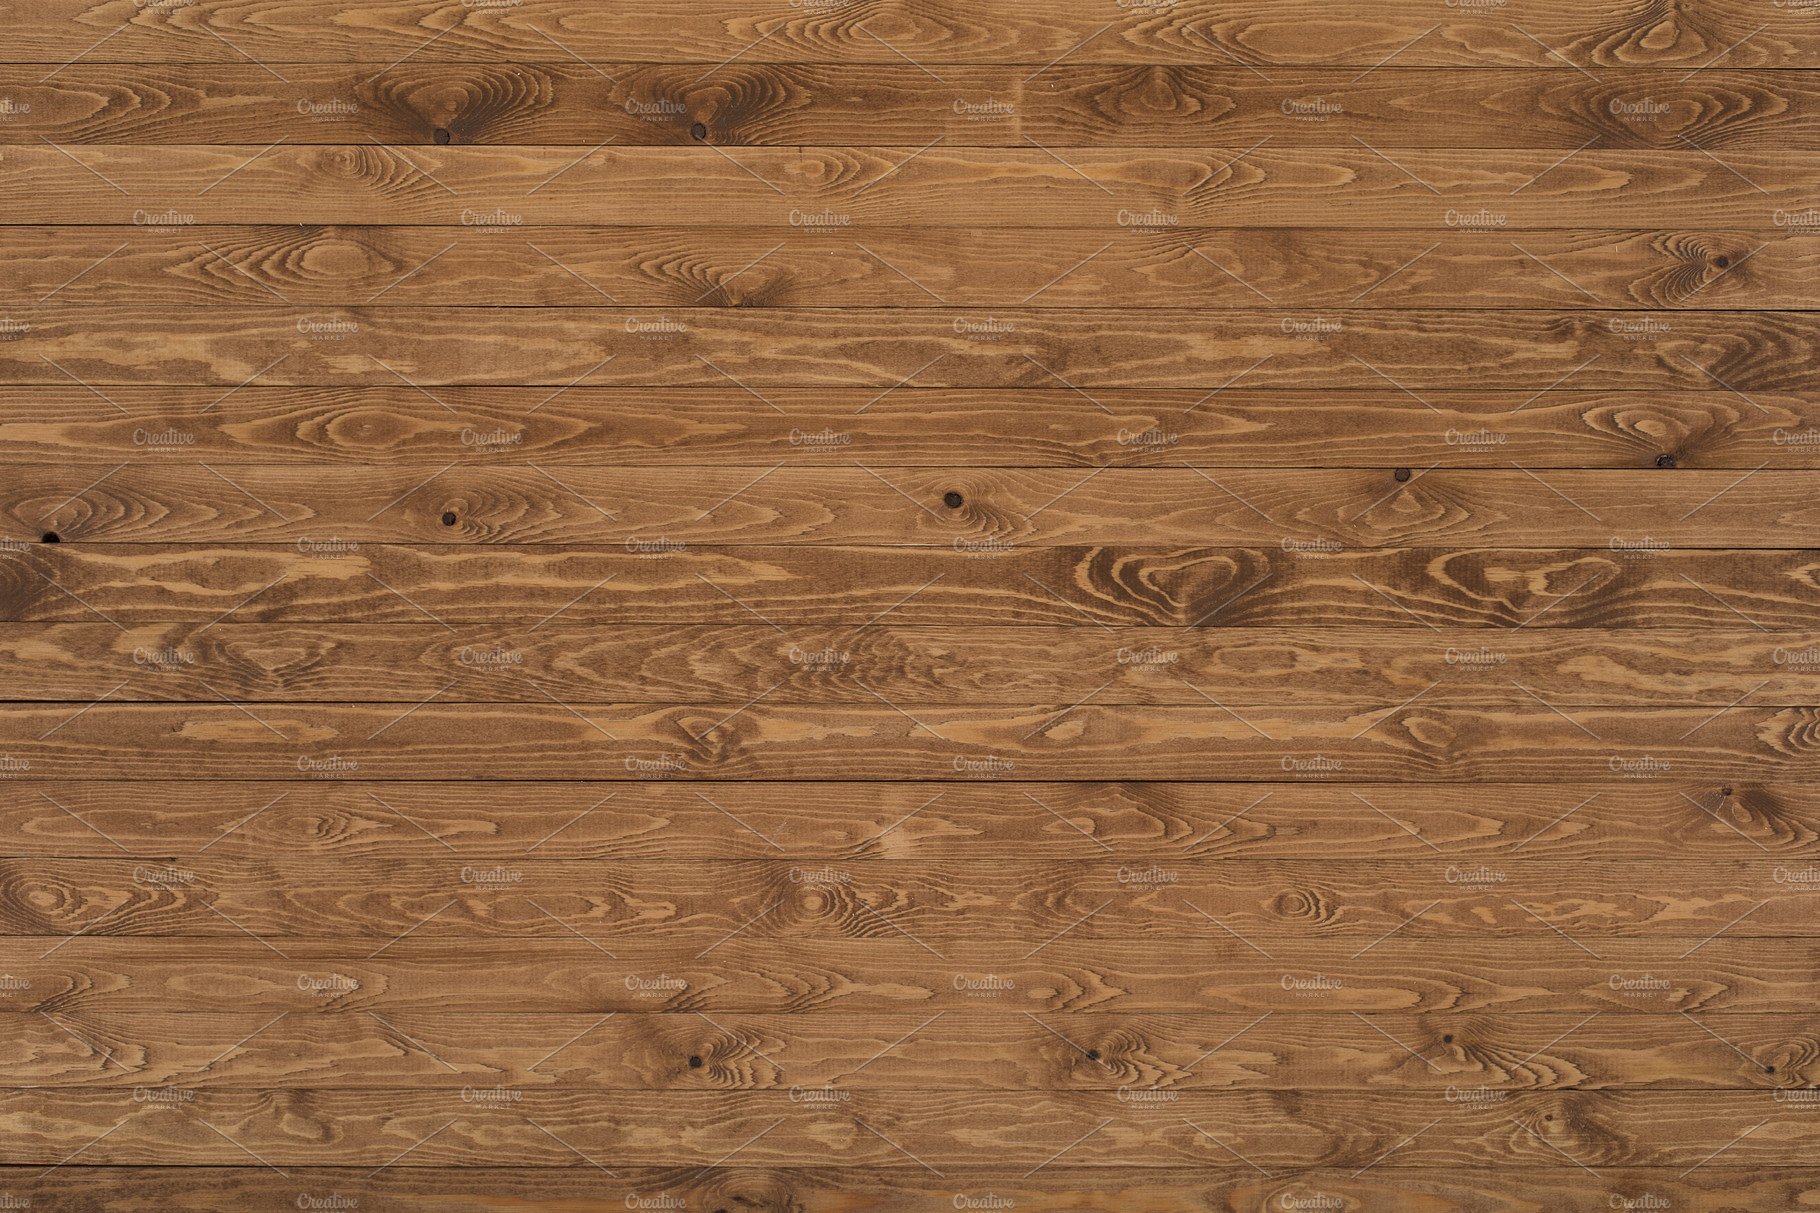 Grunge wood texture background surface ~ Textures ~ Creative Market